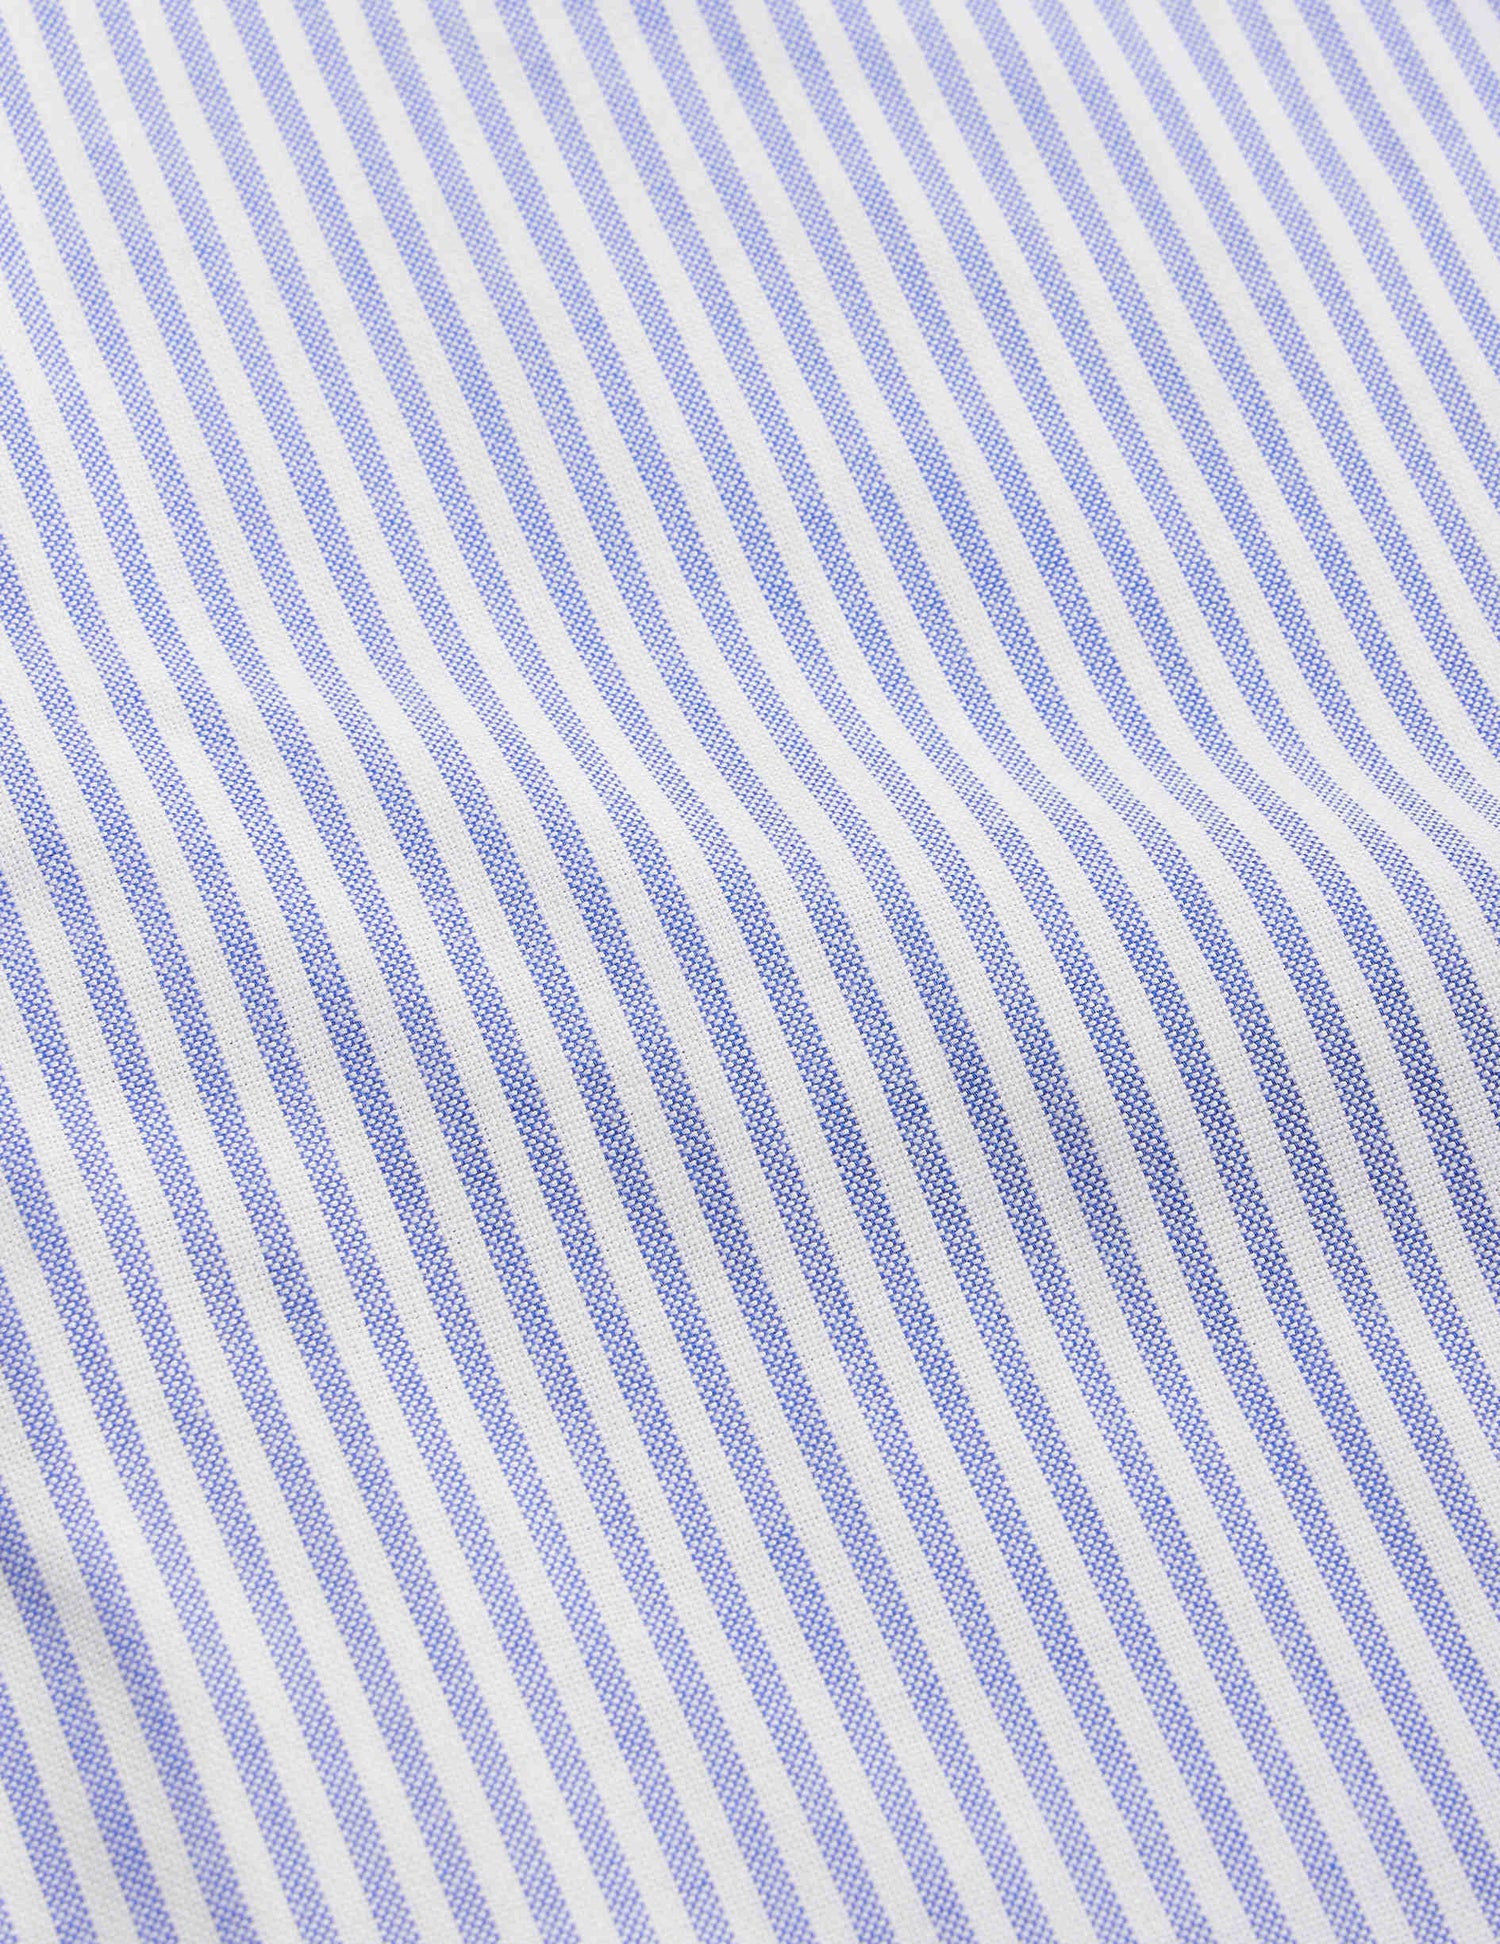 Striped blue Herwin shirt - Oxford - Officer Collar#4